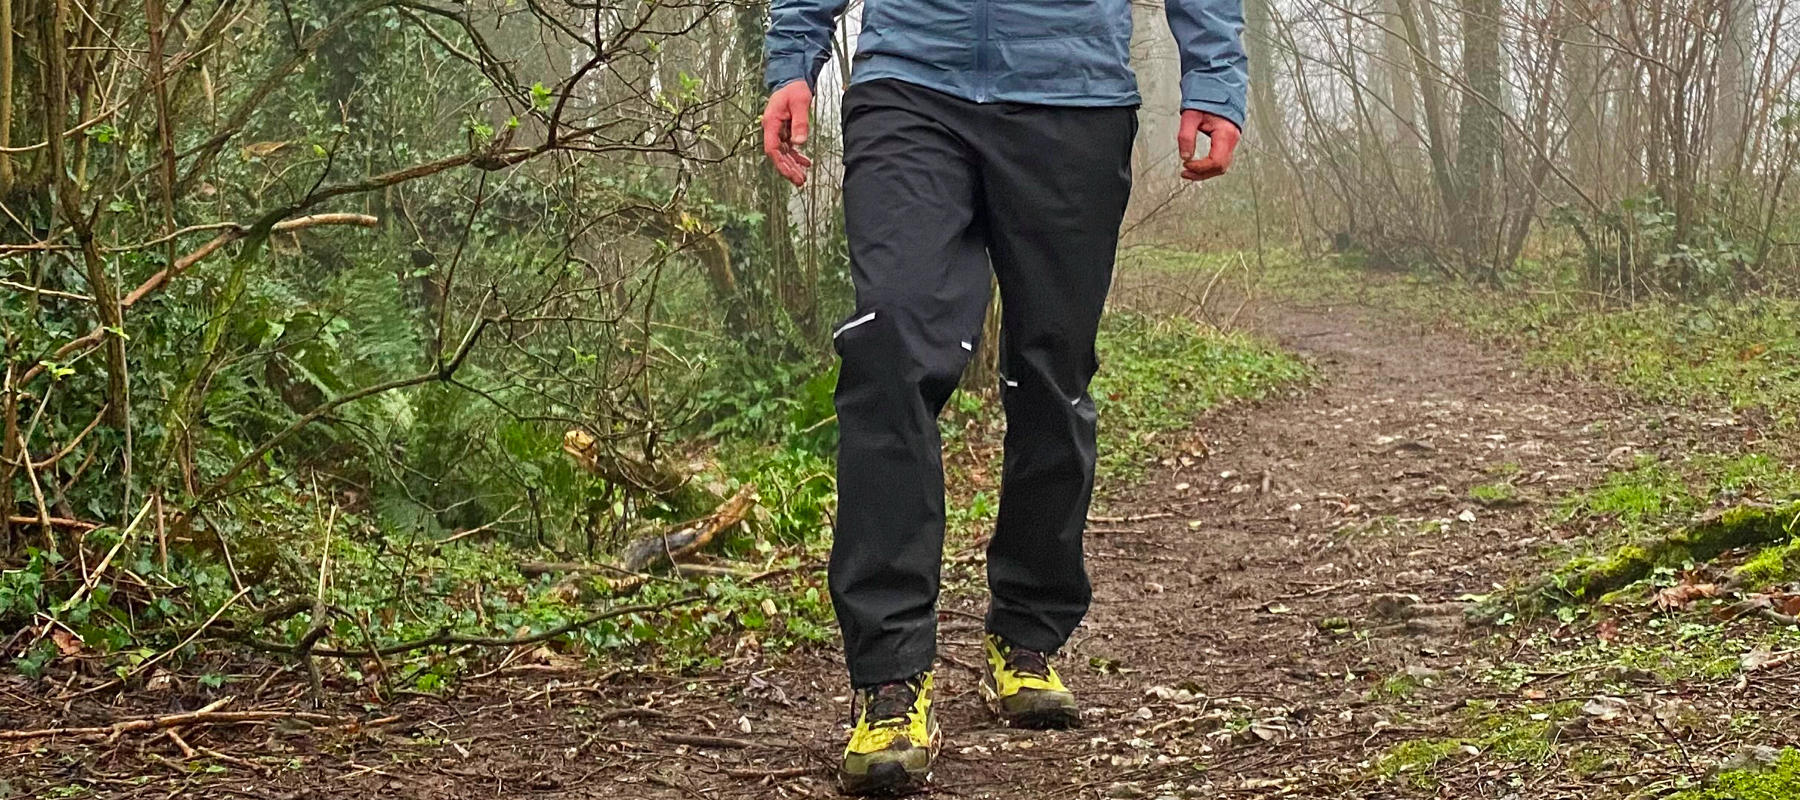 Women's Hiking Flex Pants - Khaki